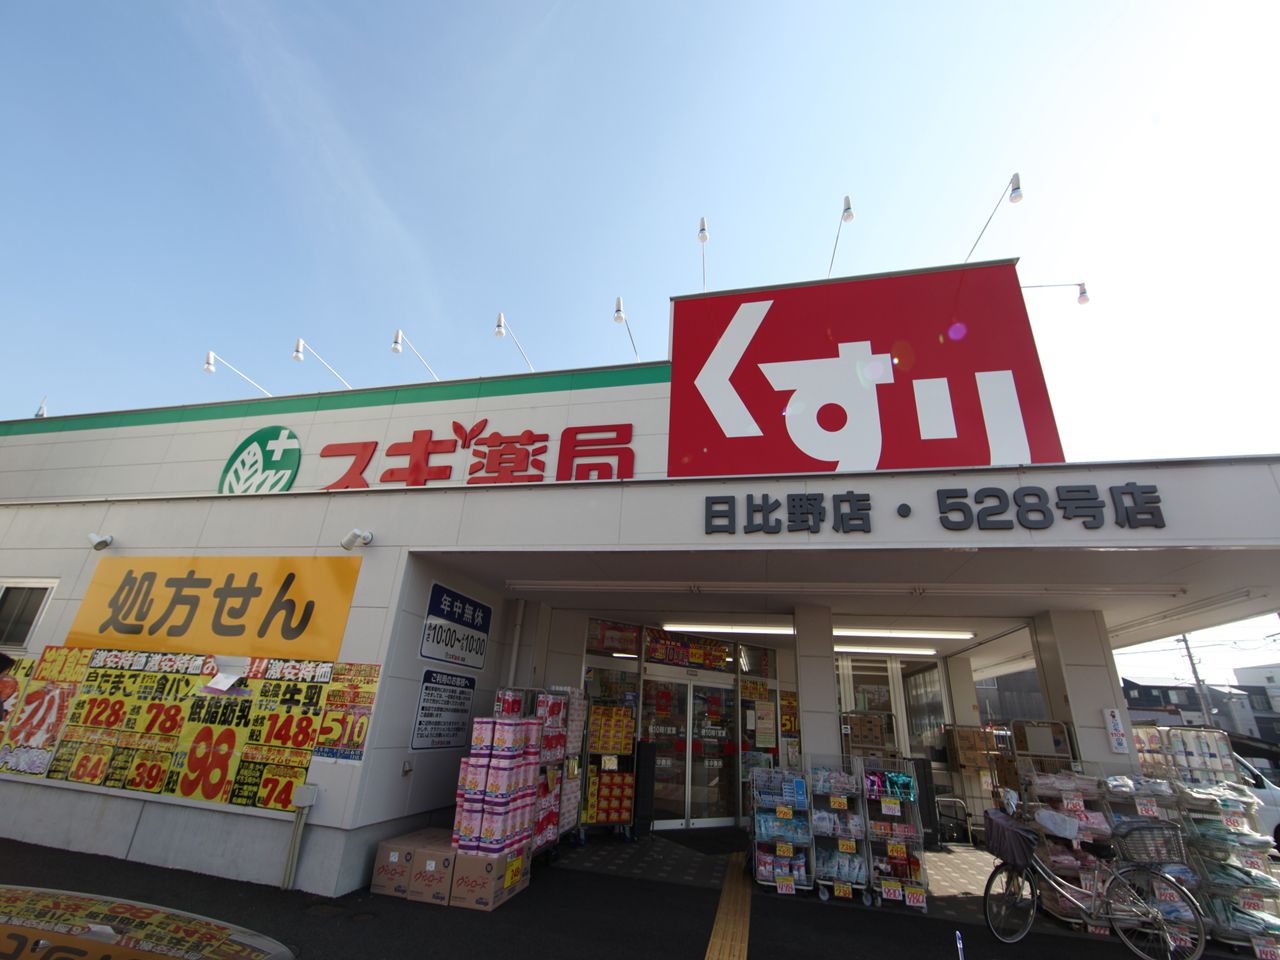 Dorakkusutoa. Cedar pharmacy Hibino shop 295m until (drugstore)